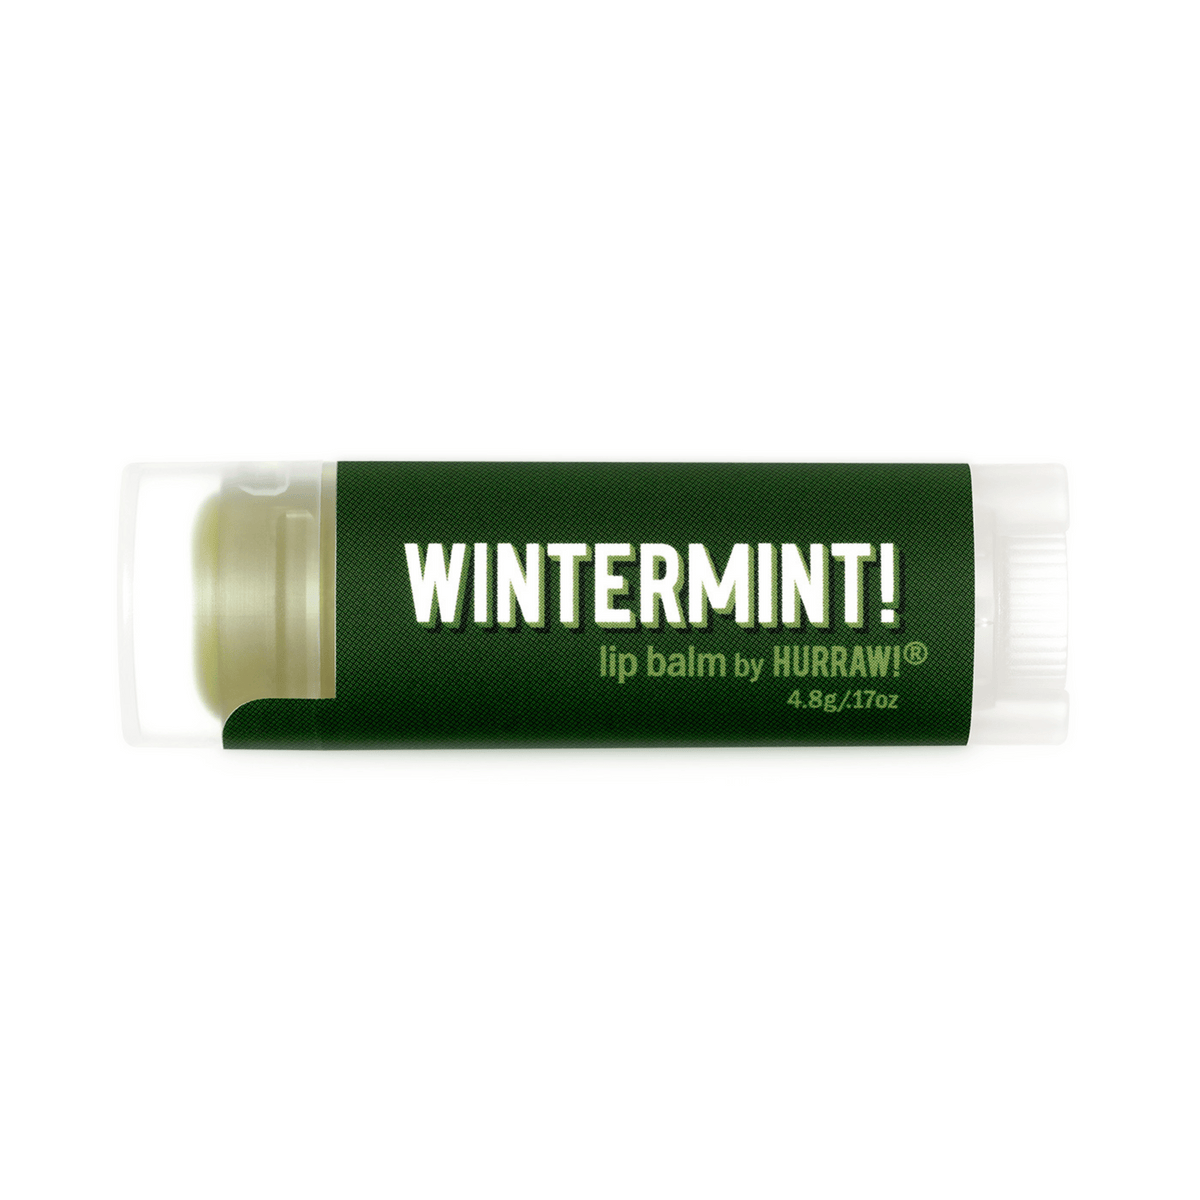 Primary Image of Wintermint Lip Balm